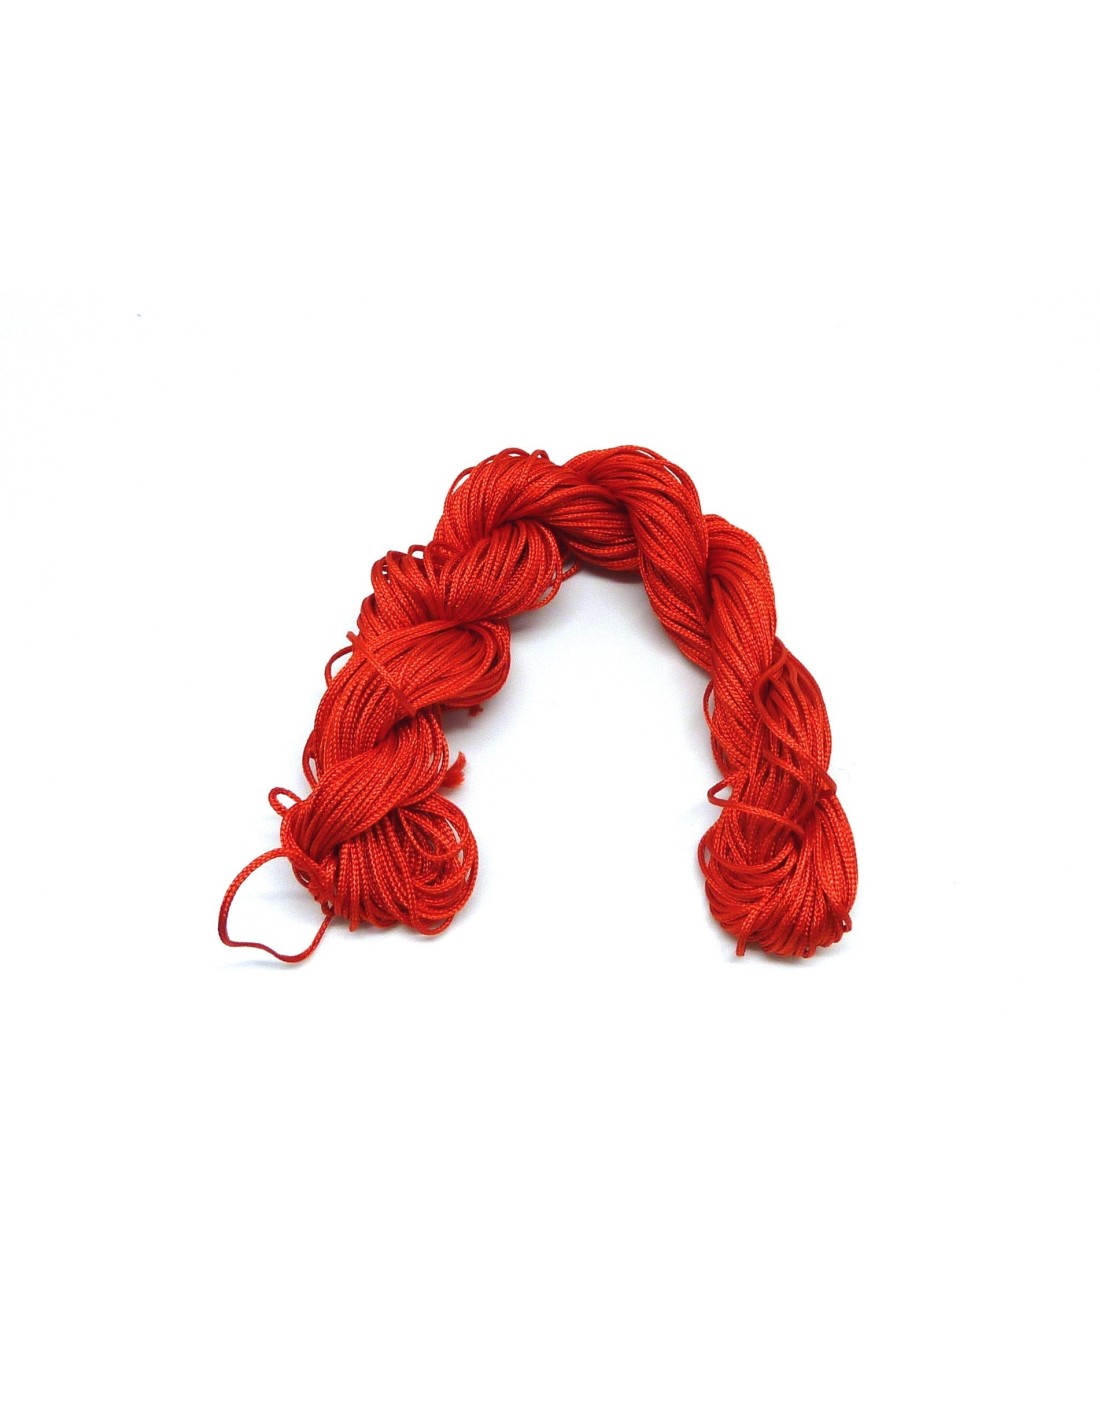 fil nylon tressé rouge garance pour tressage bracelet wrap, shamballa